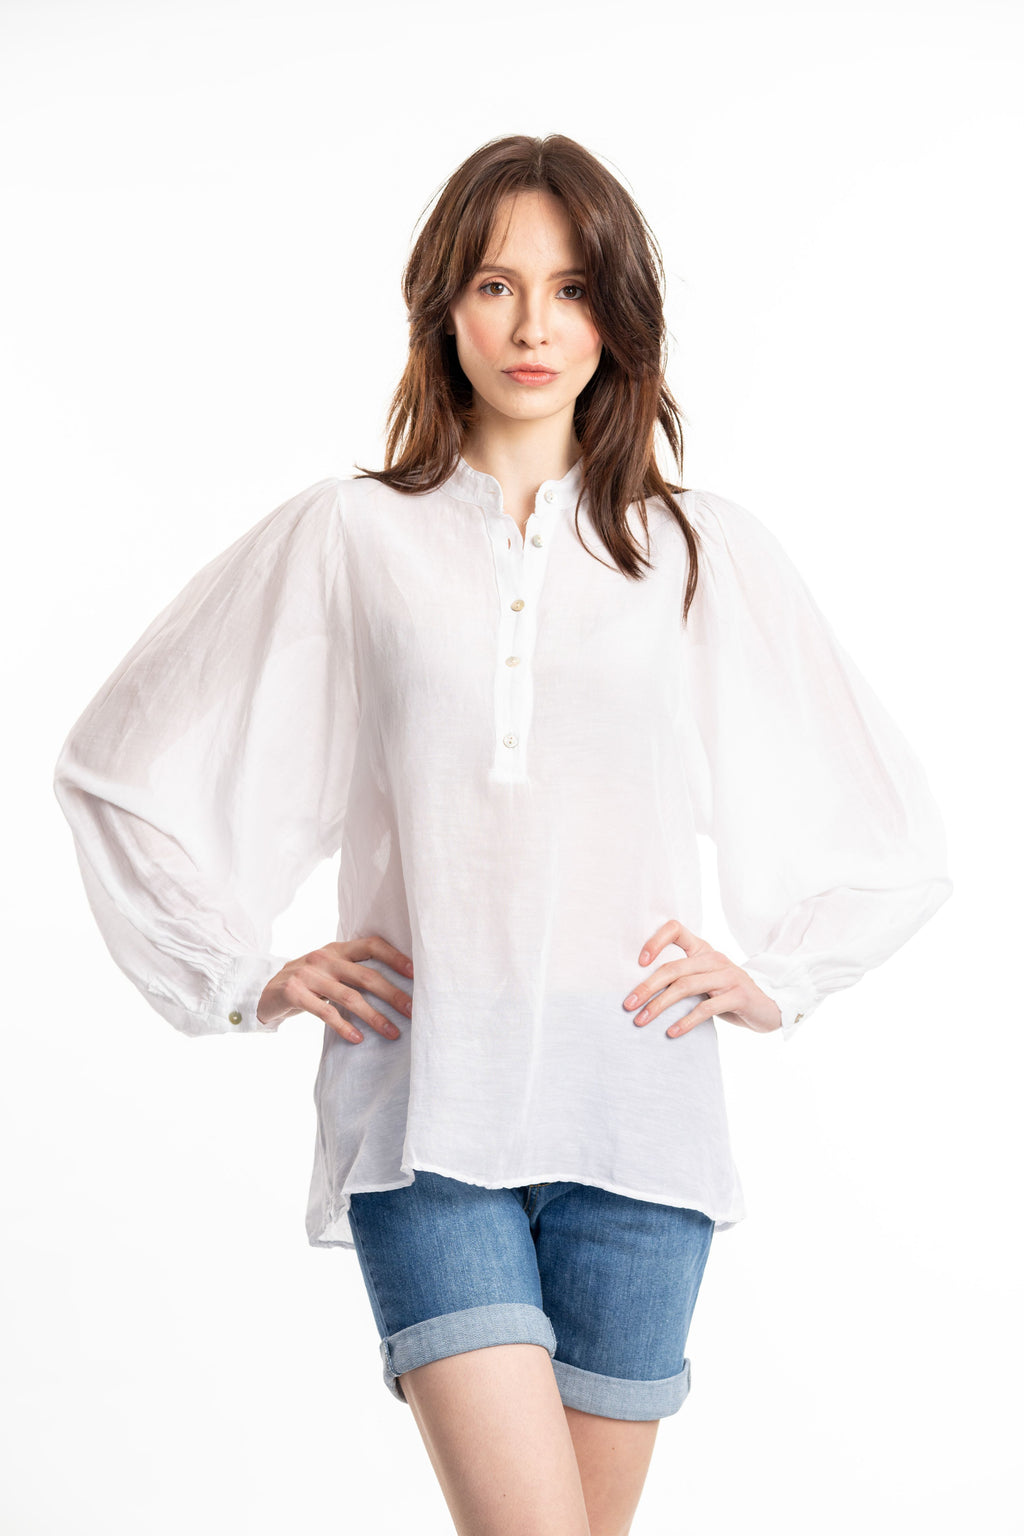 MARY S23 White Linen Shirt